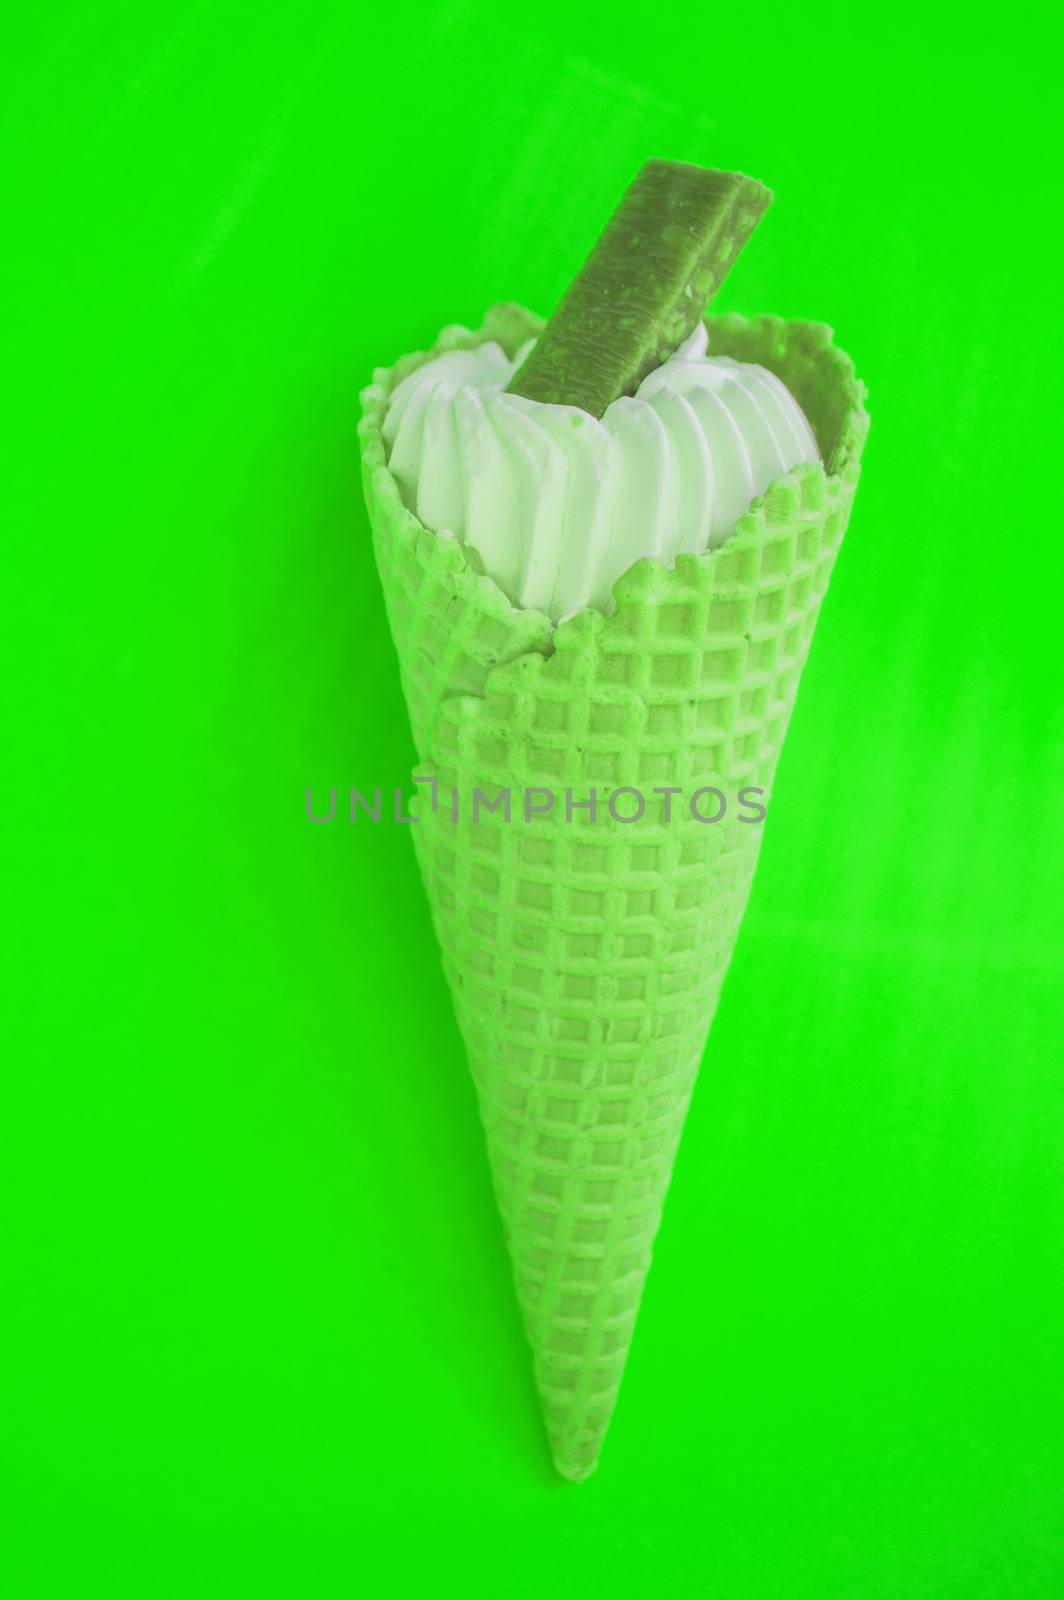 Ice cream CONE NEON COLORS pop art art Flatley, bright green background.